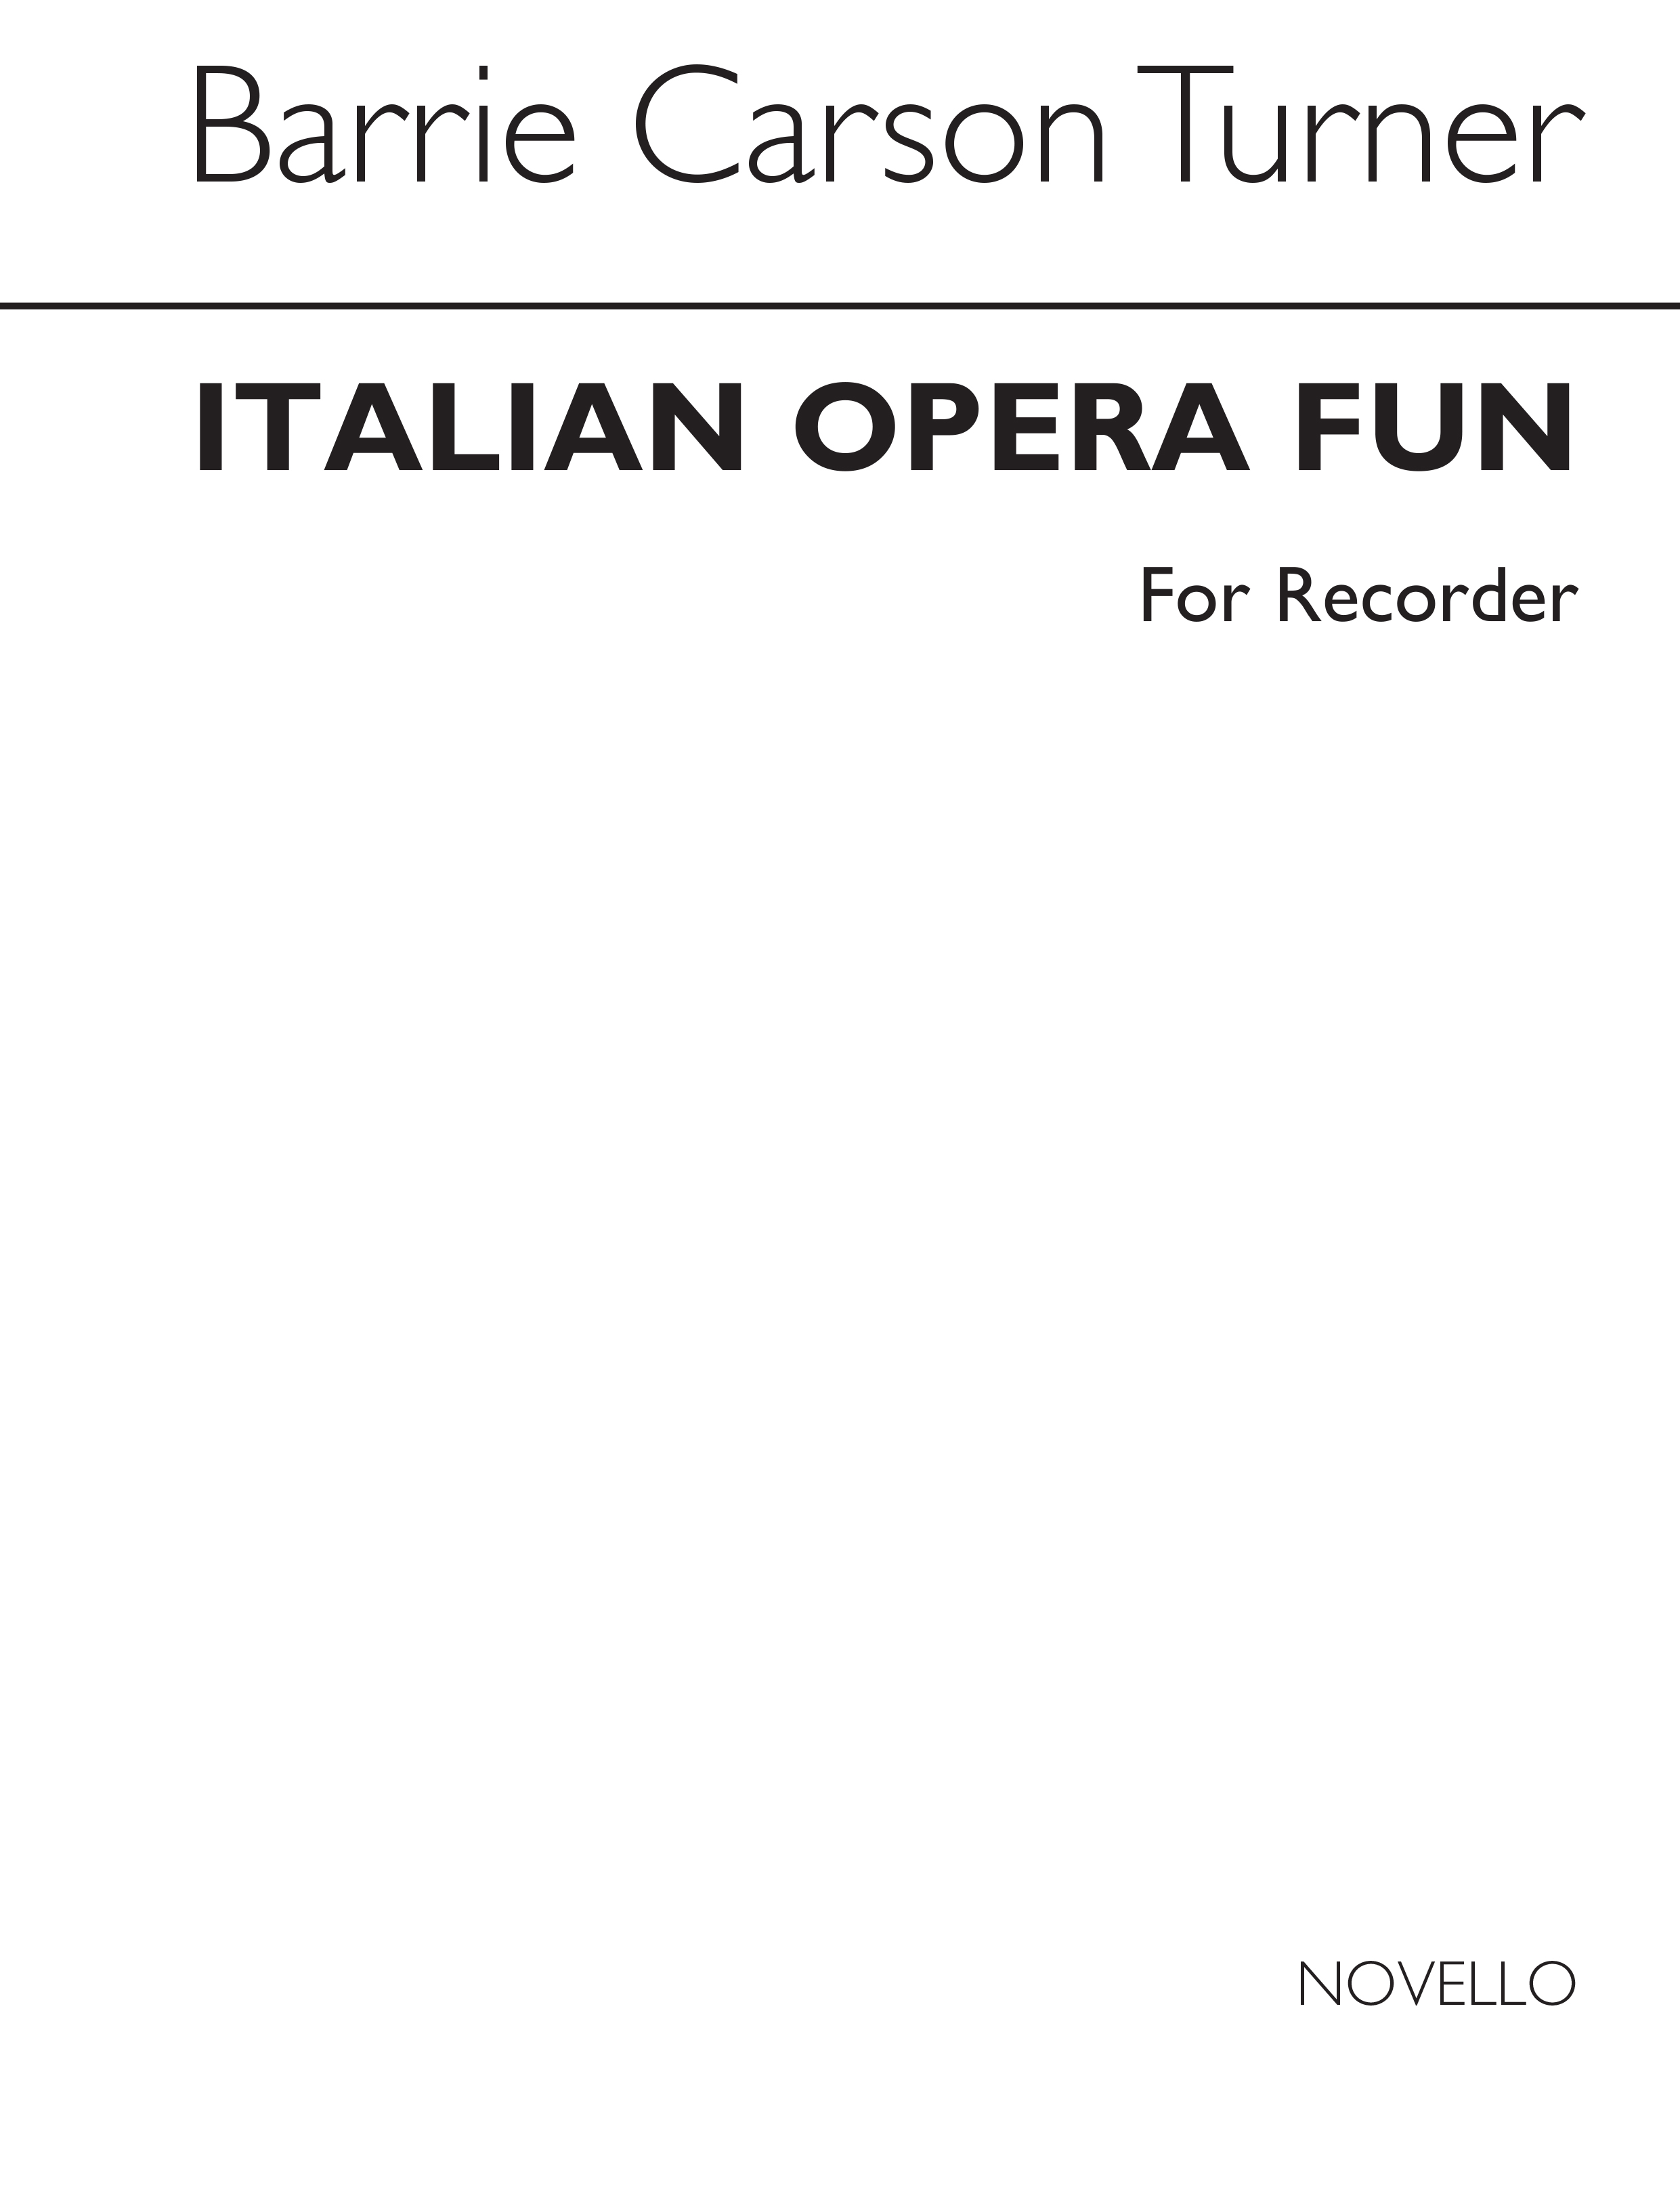 Turner: Italian Opera Fun For Recorder: Descant Recorder: Instrumental Album